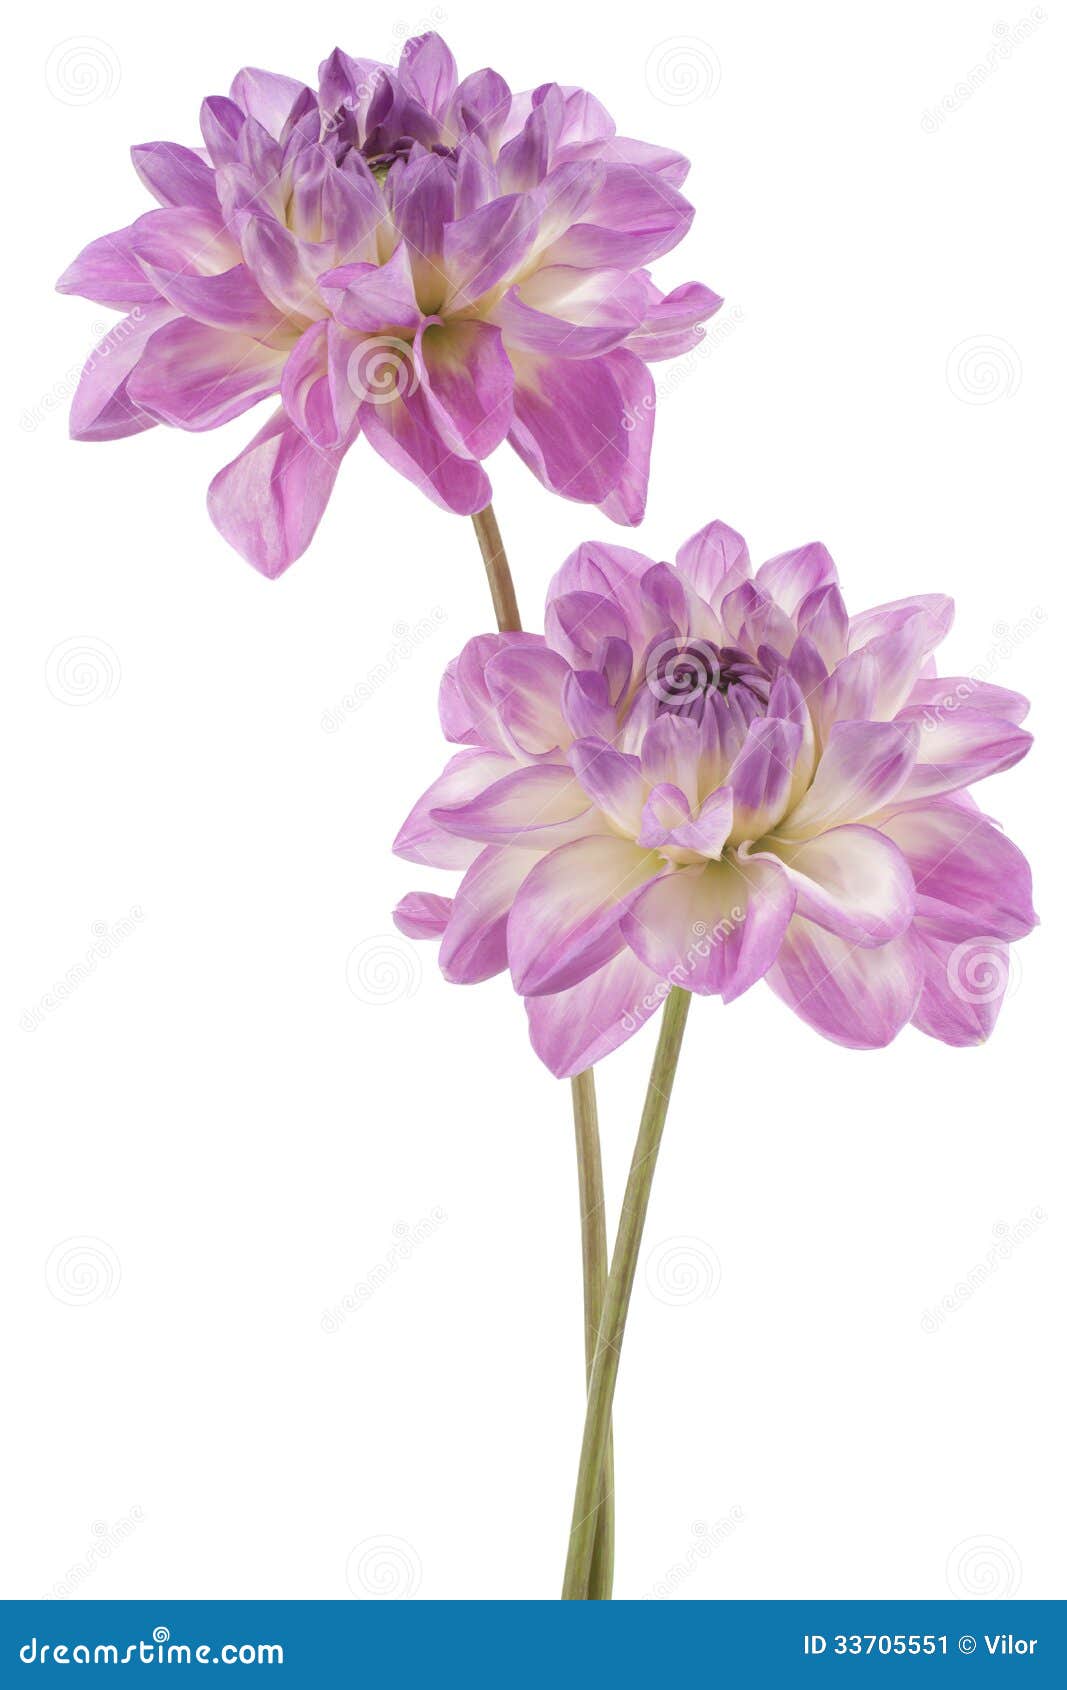 http://thumbs.dreamstime.com/z/dahlia-studio-shot-fuchsia-colored-flowers-isolated-white-background-large-depth-field-dof-macro-symbol-elegance-33705551.jpg